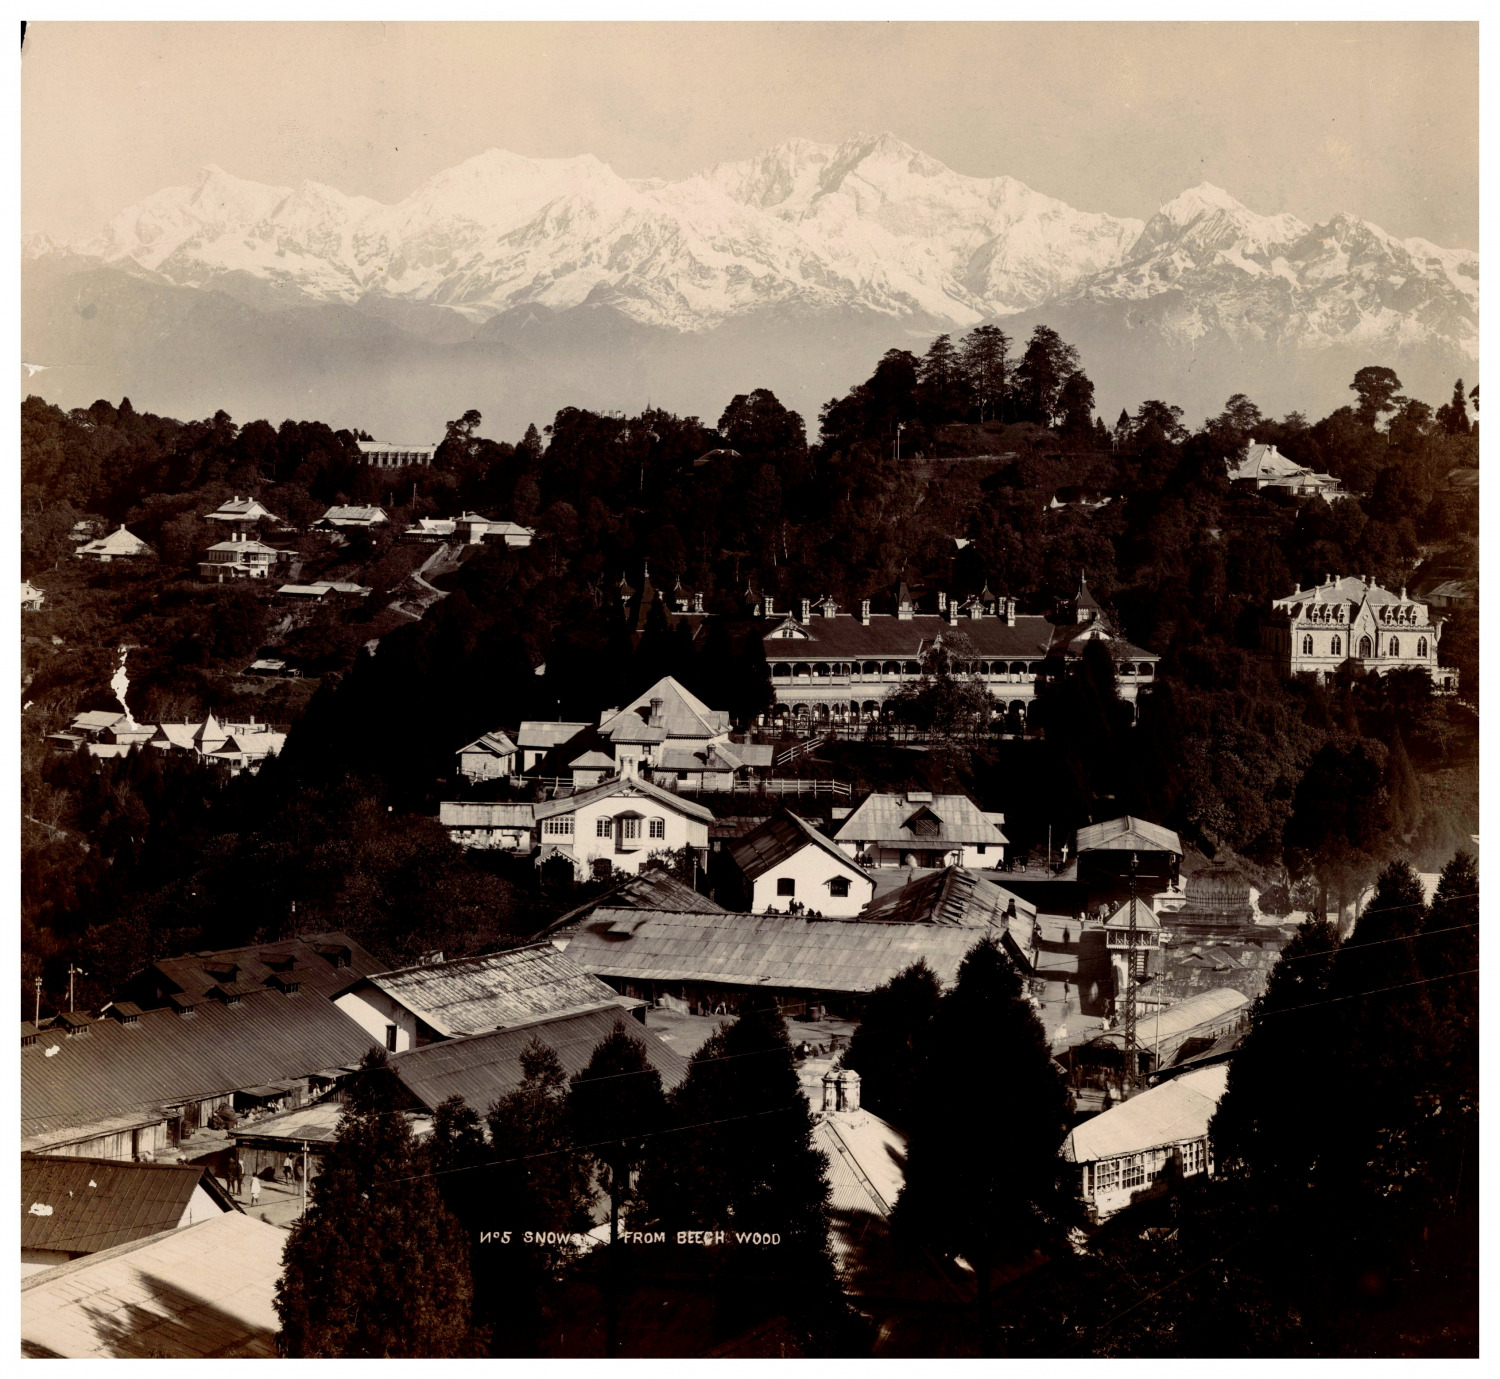 Thomas Parr, India, Darjeeling, Snows from Beech Wood Vintage Albumen Print Ti